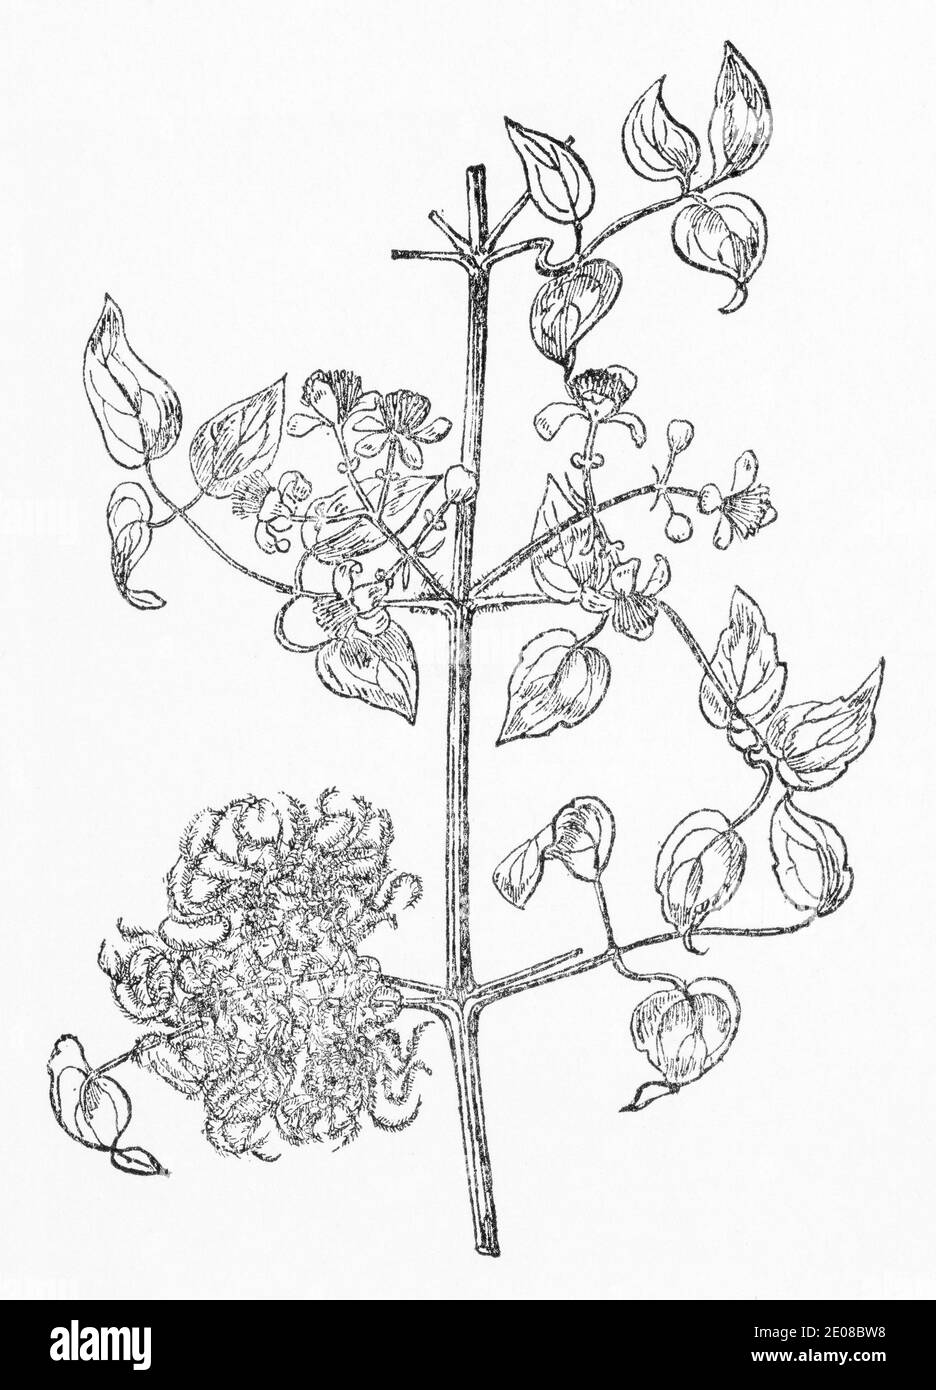 Old botanical illustration engraving of Travellers Joy / Clematis vitalba. Traditional medicinal herbal plant. See Notes Stock Photo